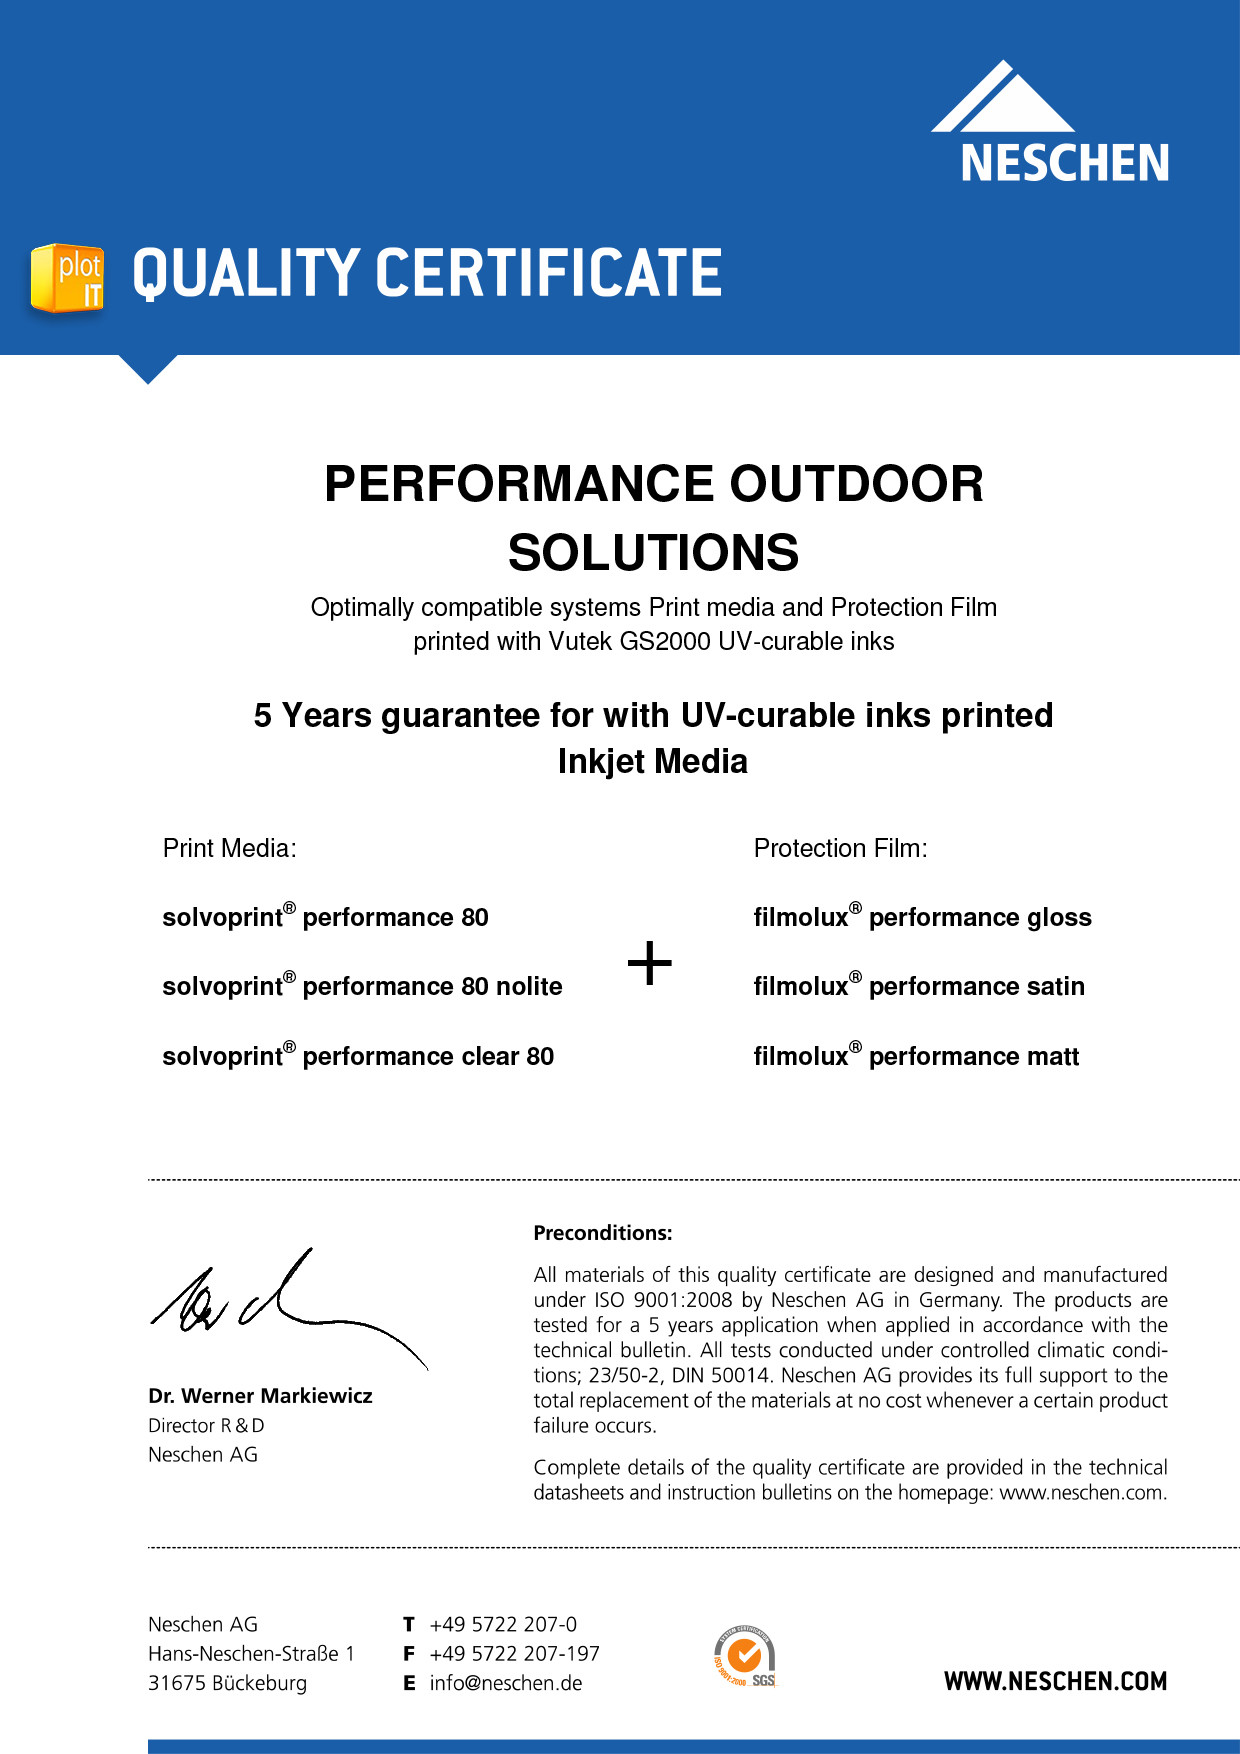 Solvoprint Performance 80_UVC QUALITY CERTIFICATION